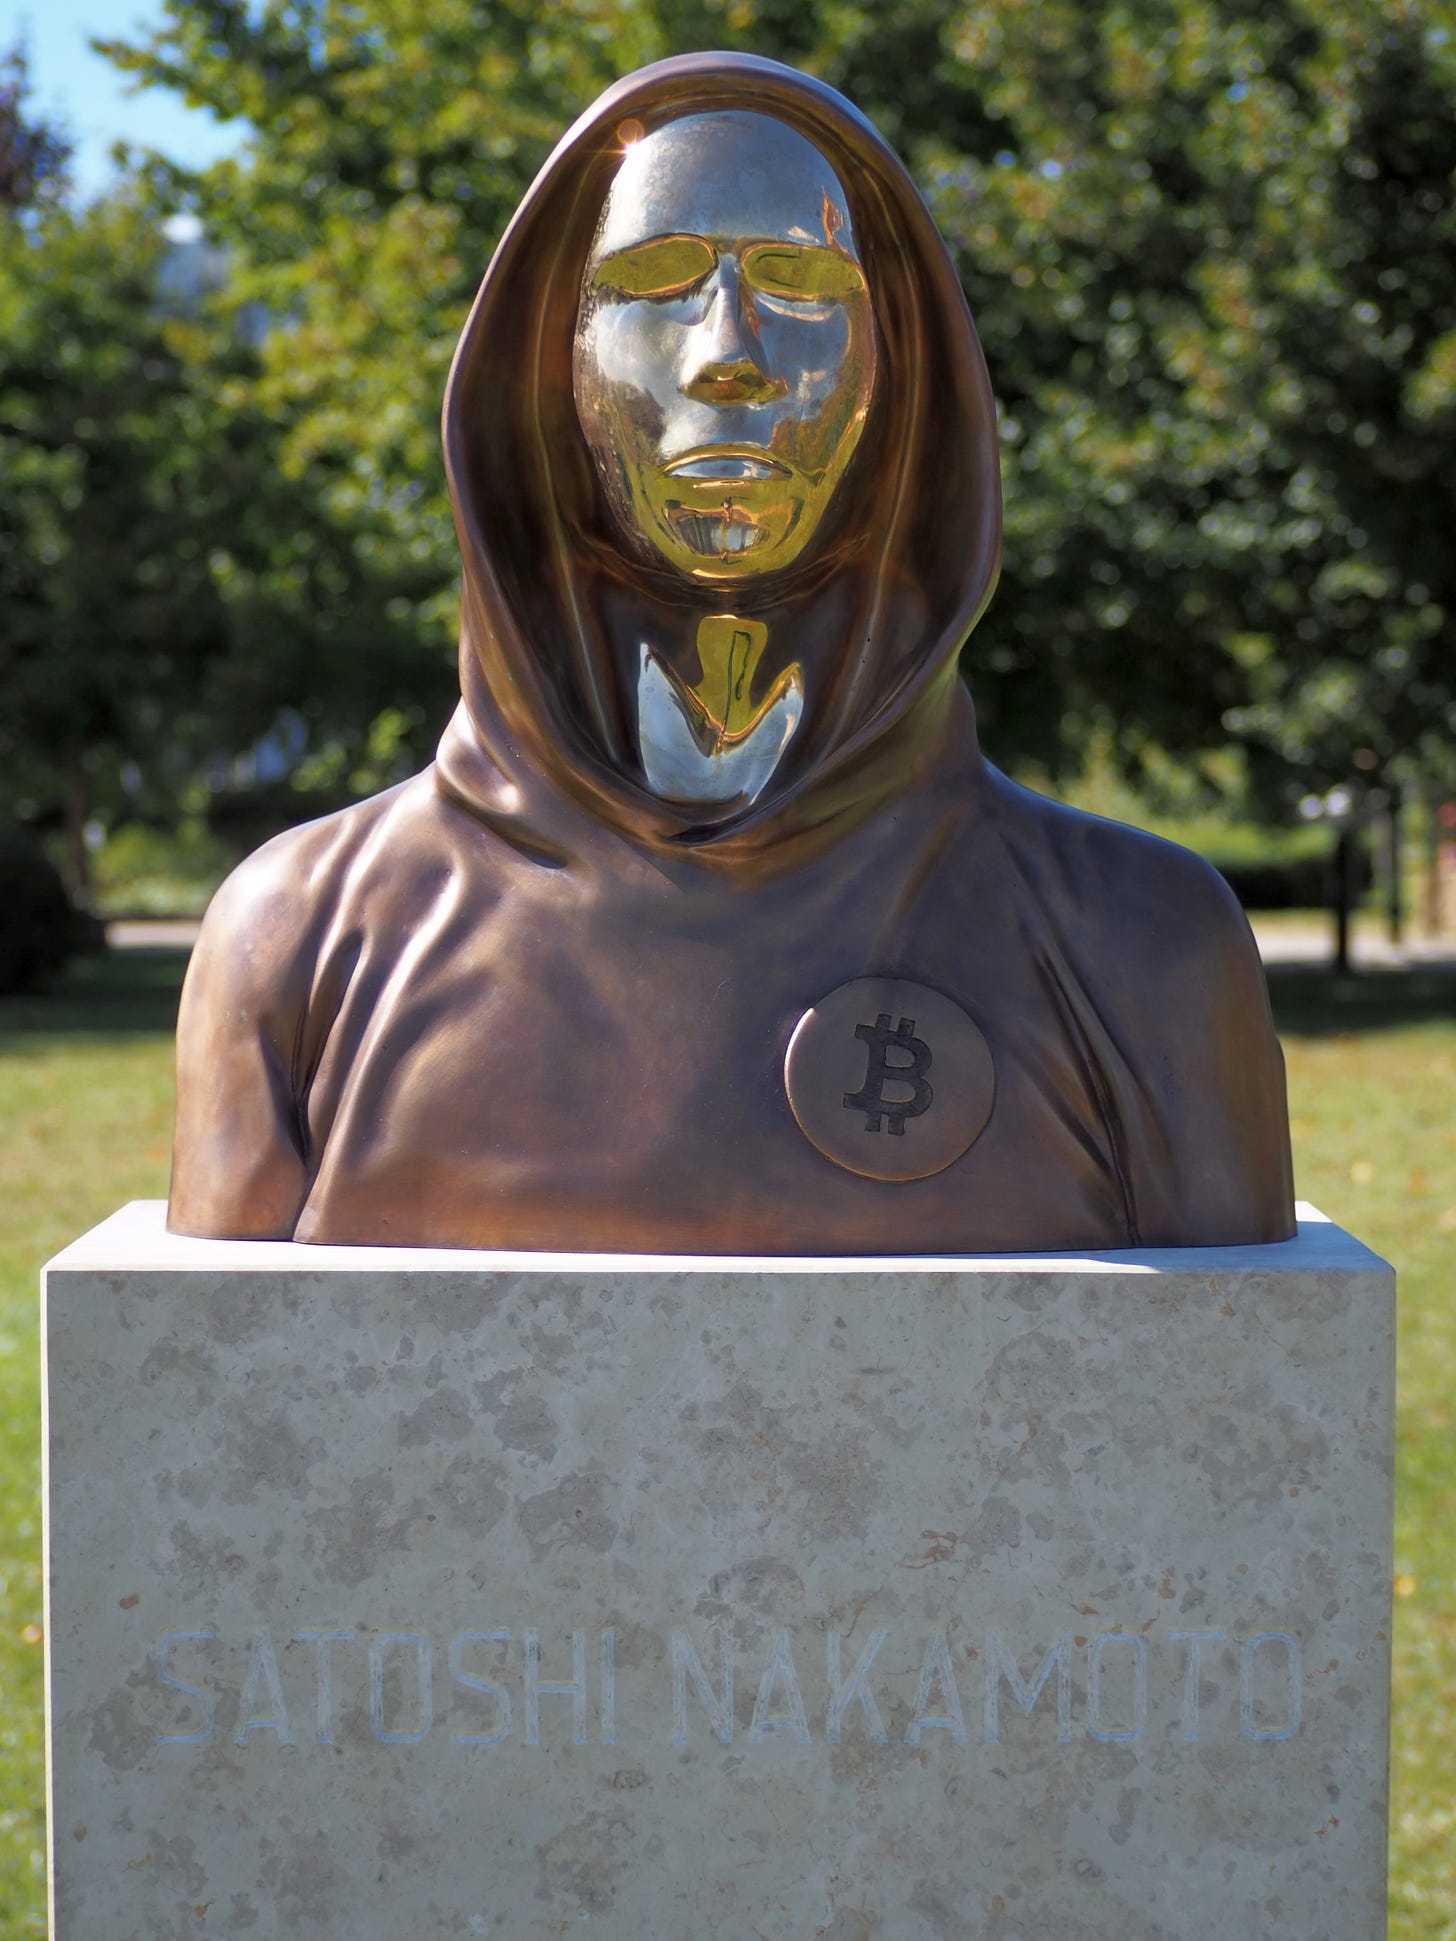 File:Bust of Satoshi Nakamoto in Budapest.jpg - Wikimedia Commons